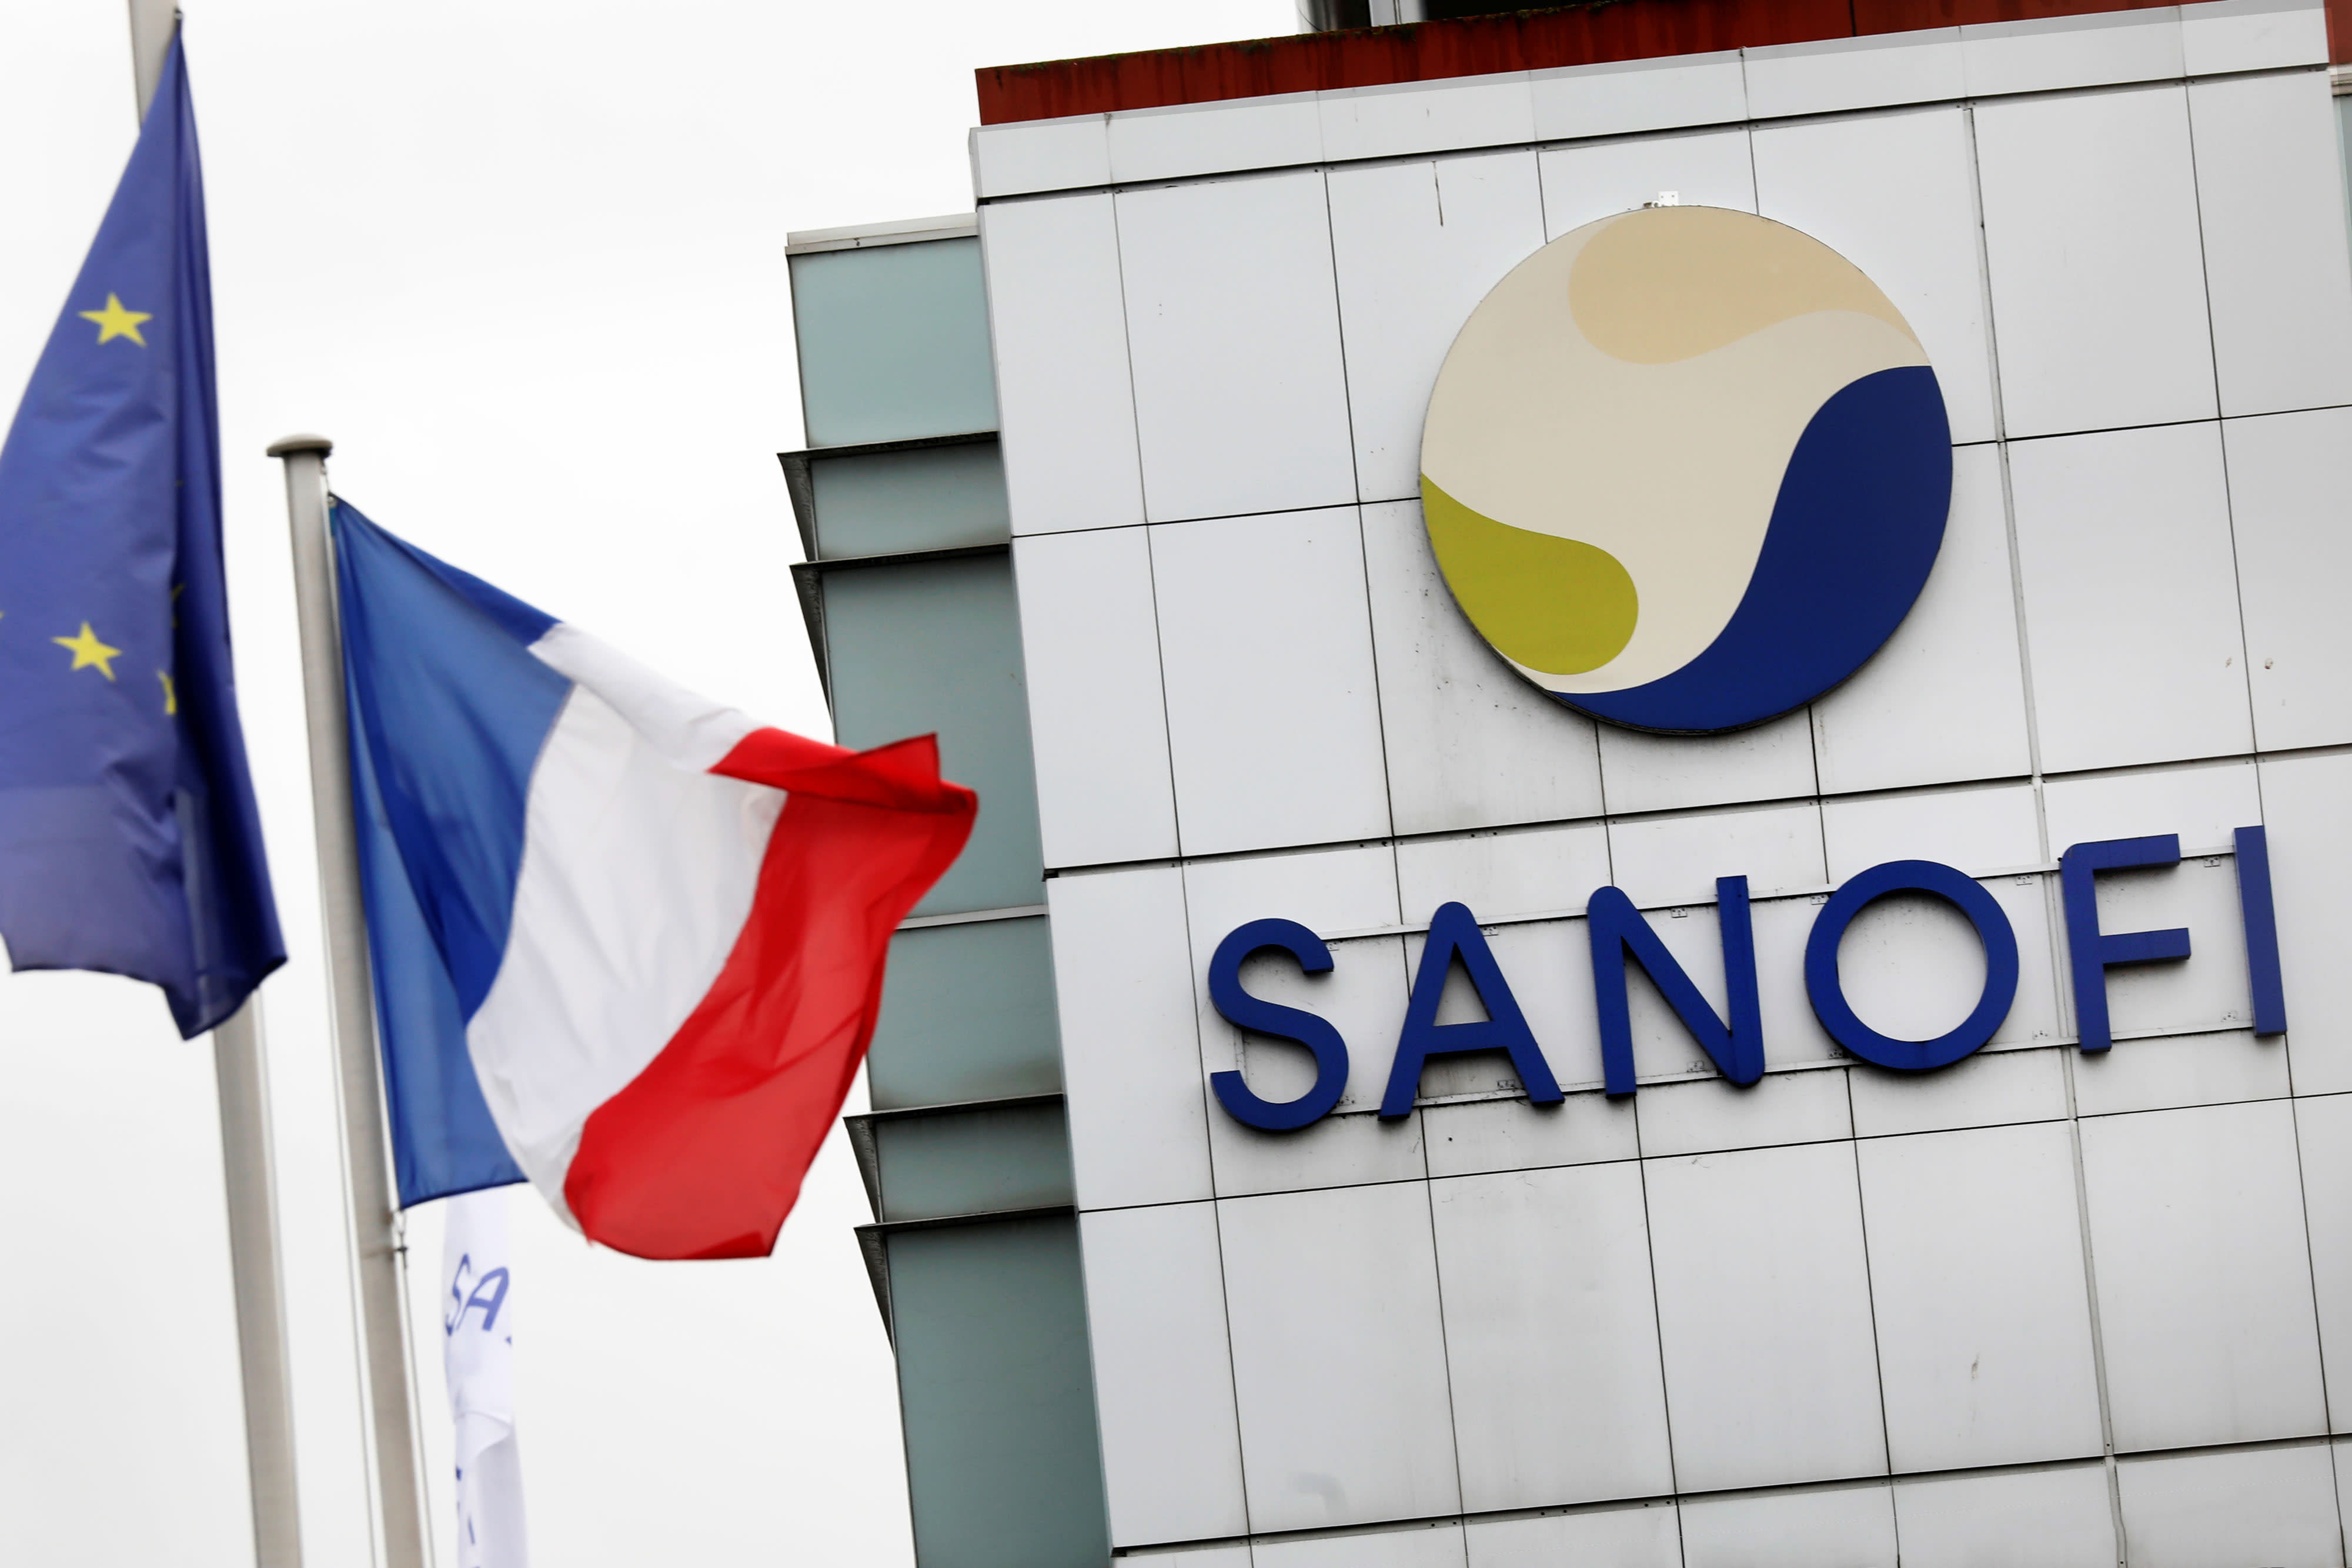 Sanofi will produce 100 million doses of Pfizer-BioNTech vaccine, says the CEO